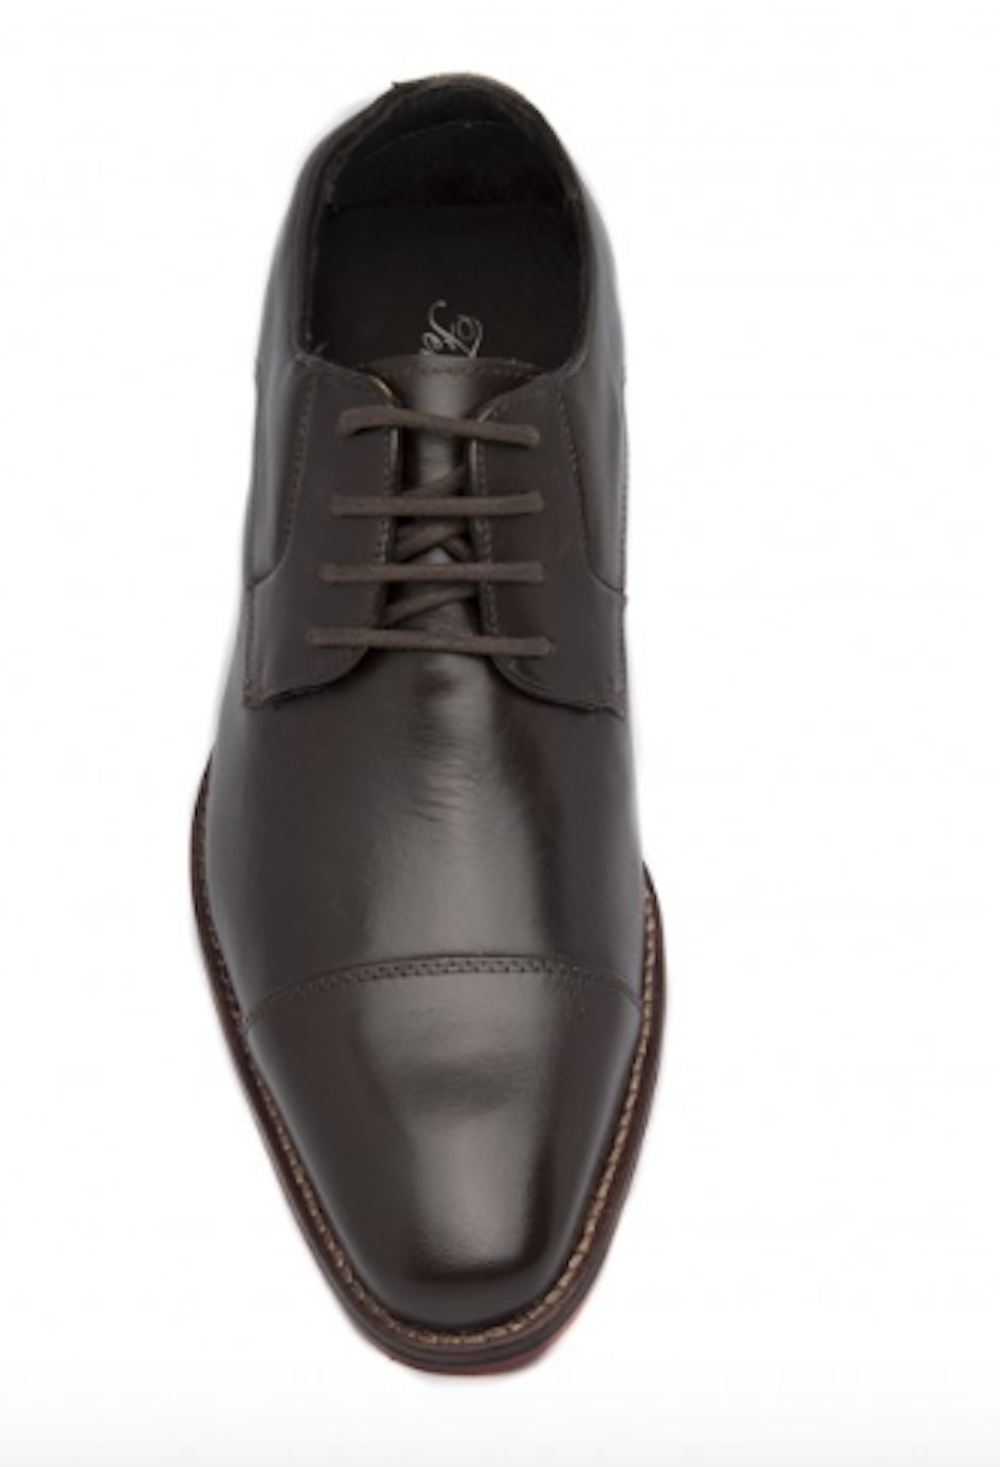 Sapatos masculinos de couro Ferracini Caravaggio 5667